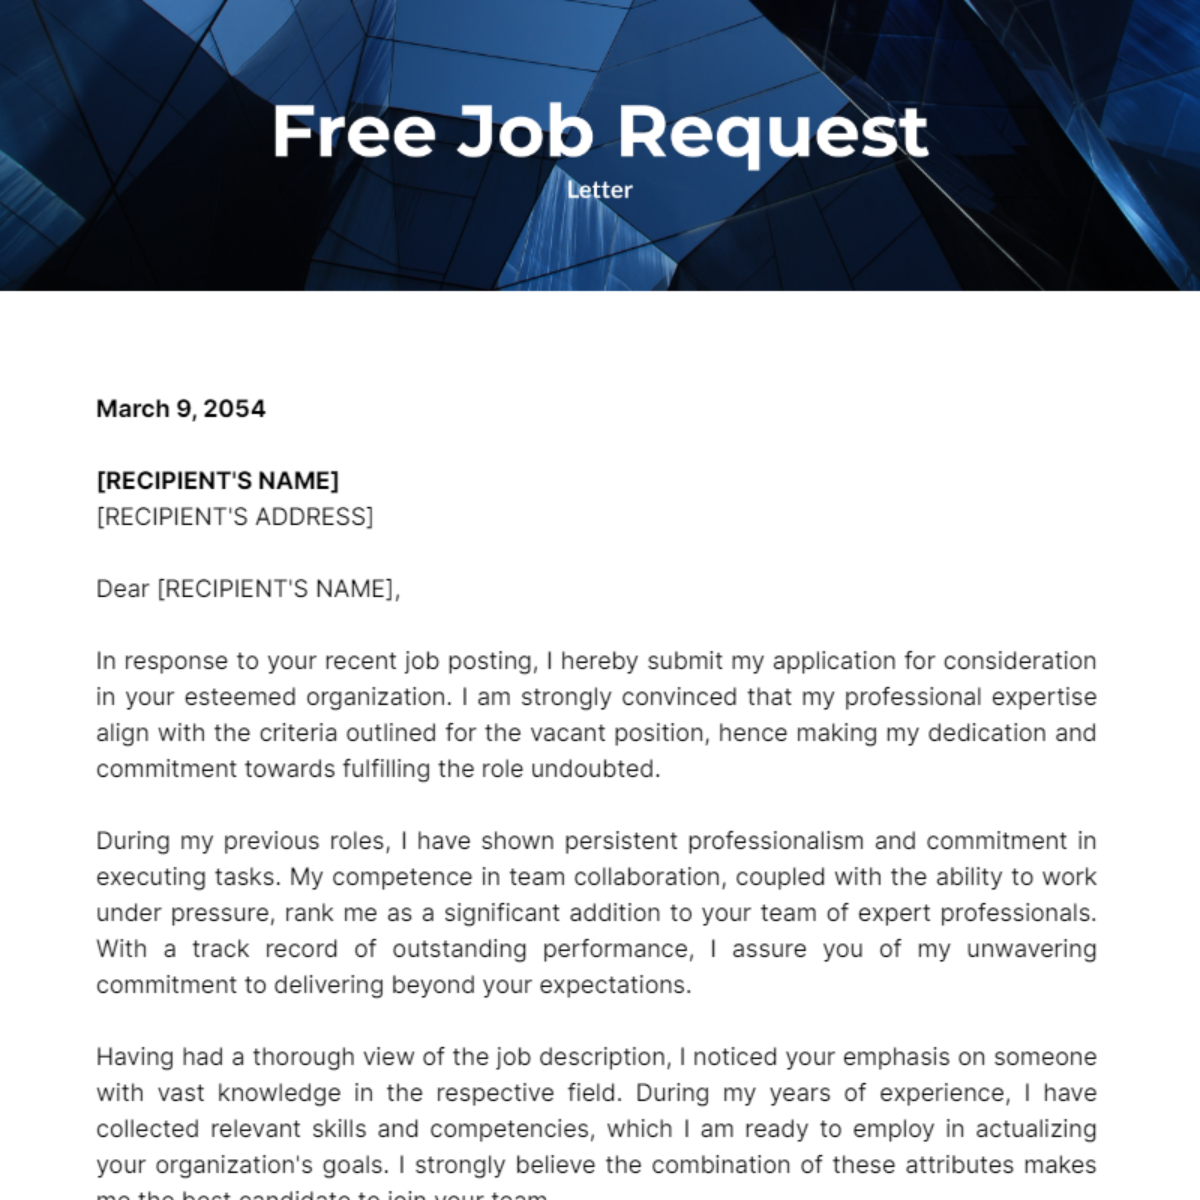 Job Request Letter Template